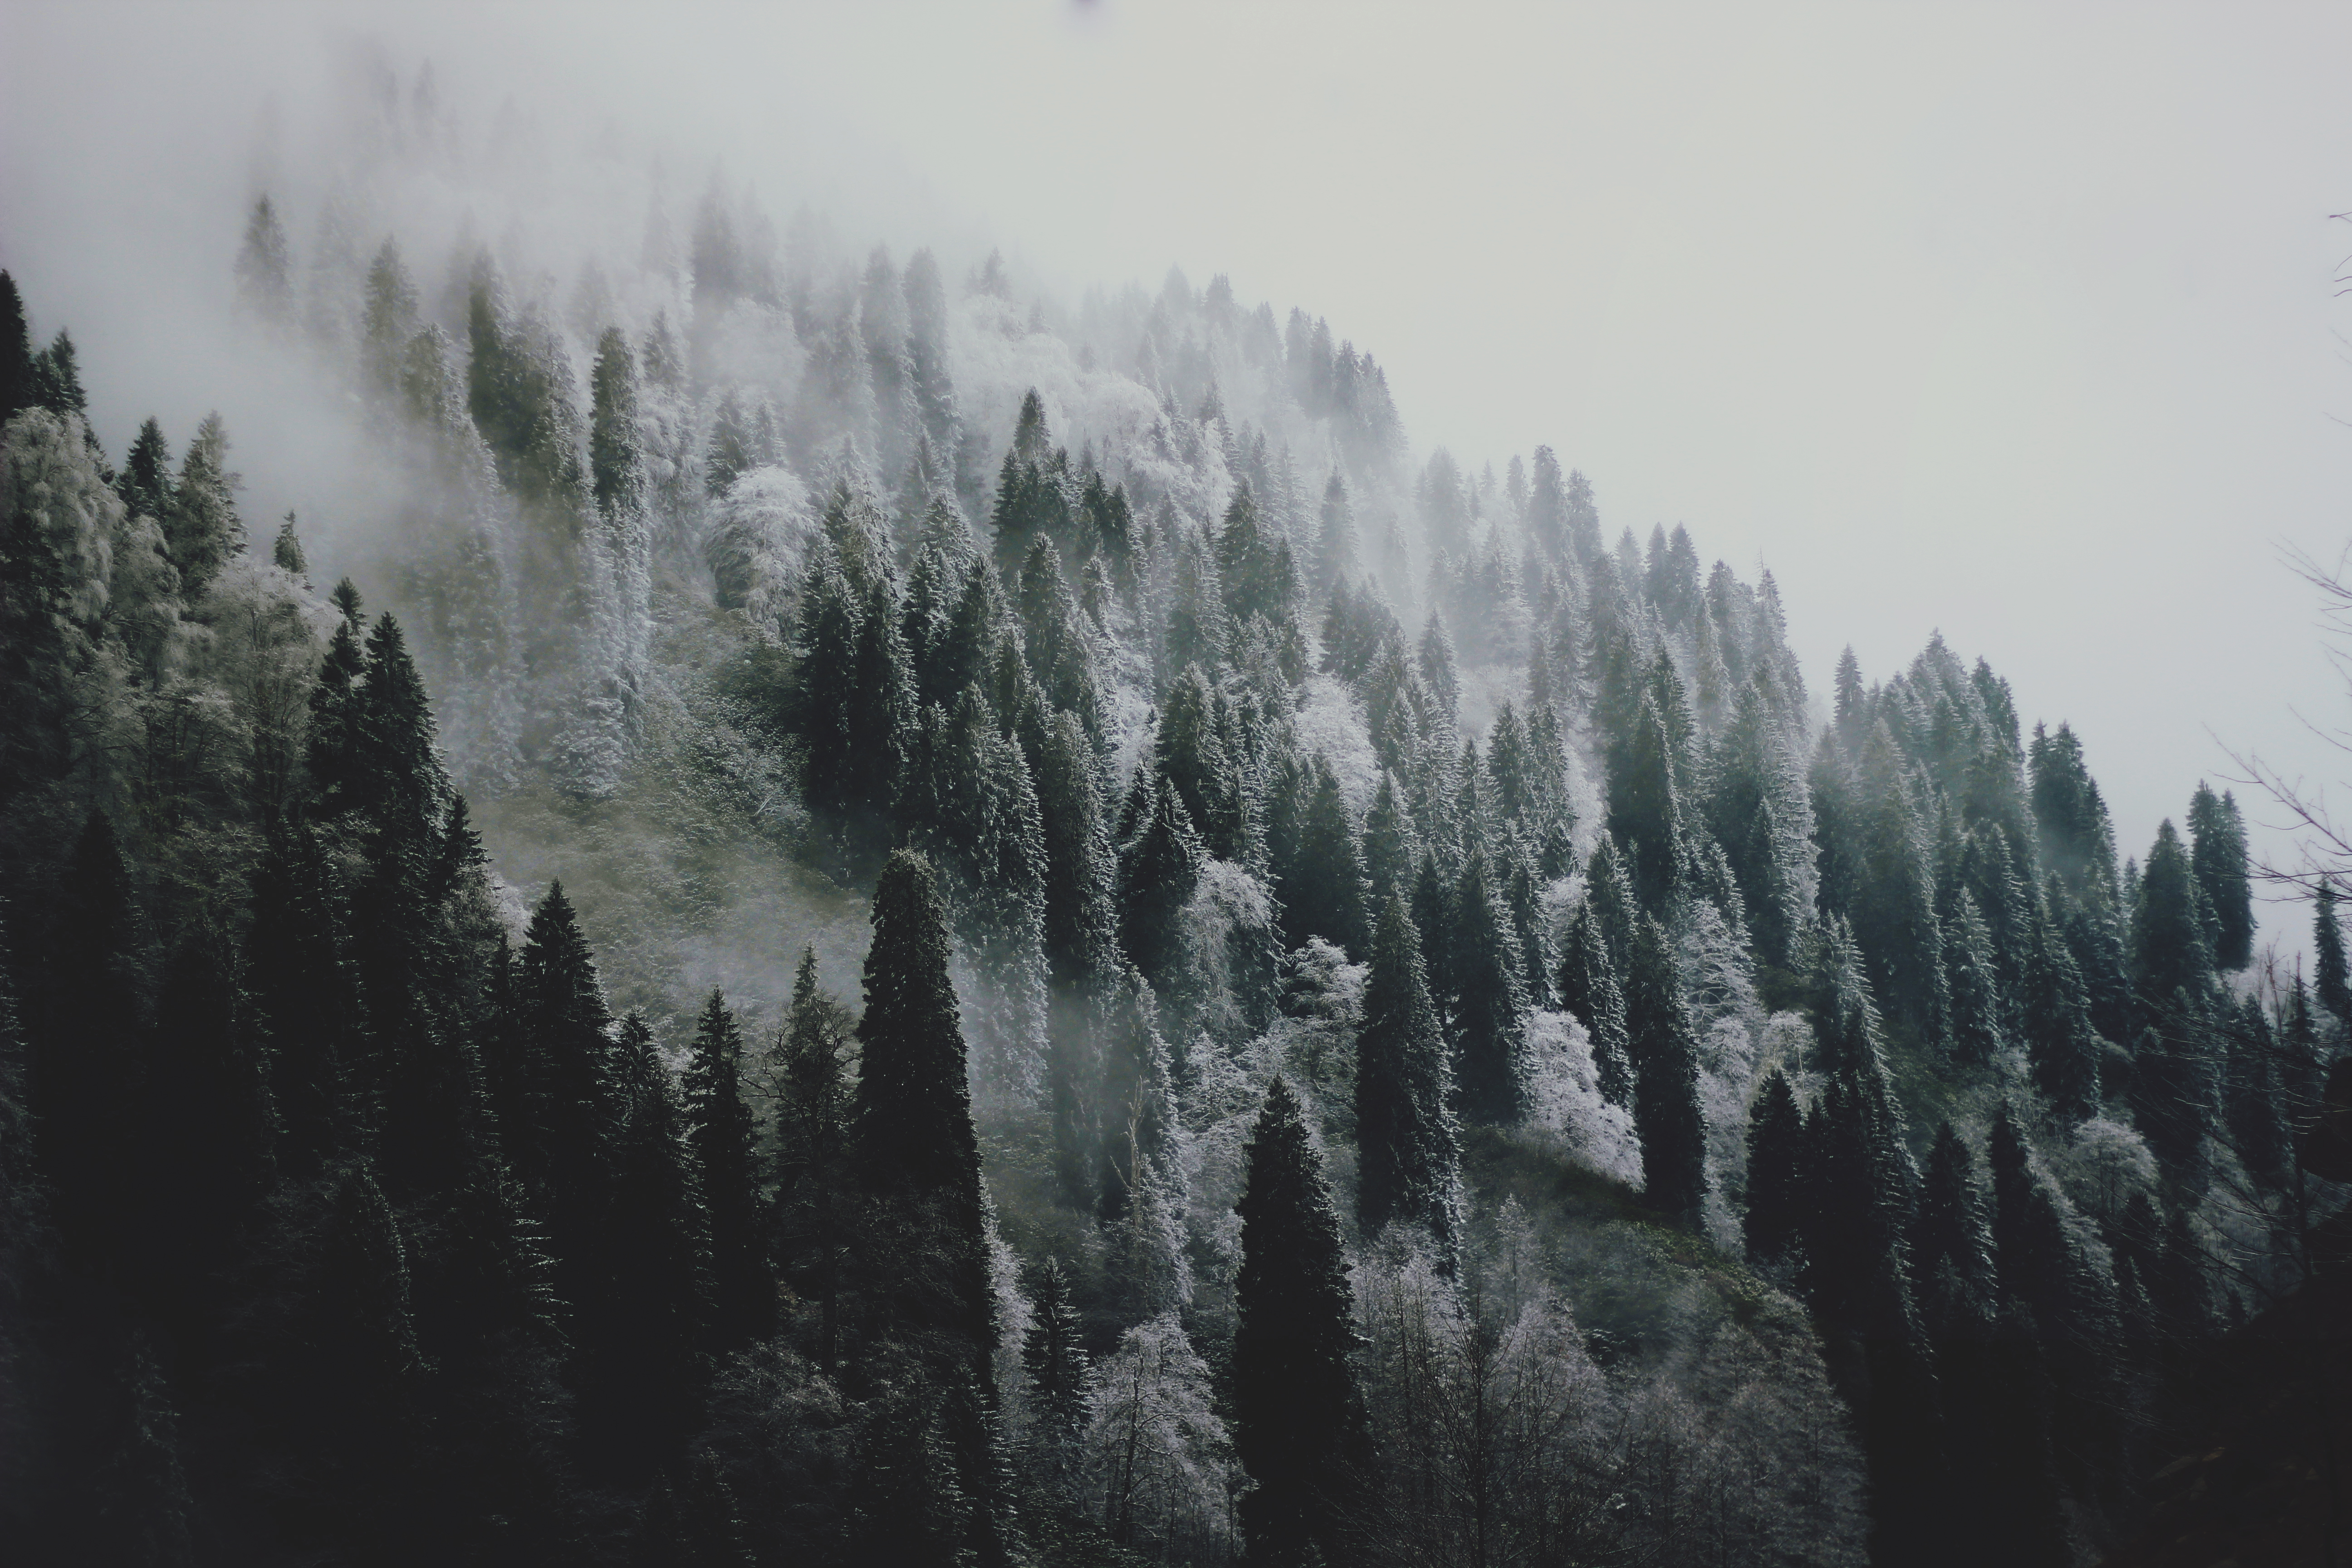 General 5184x3456 landscape winter snow forest trees December (Month) mist film grain photography nature cold